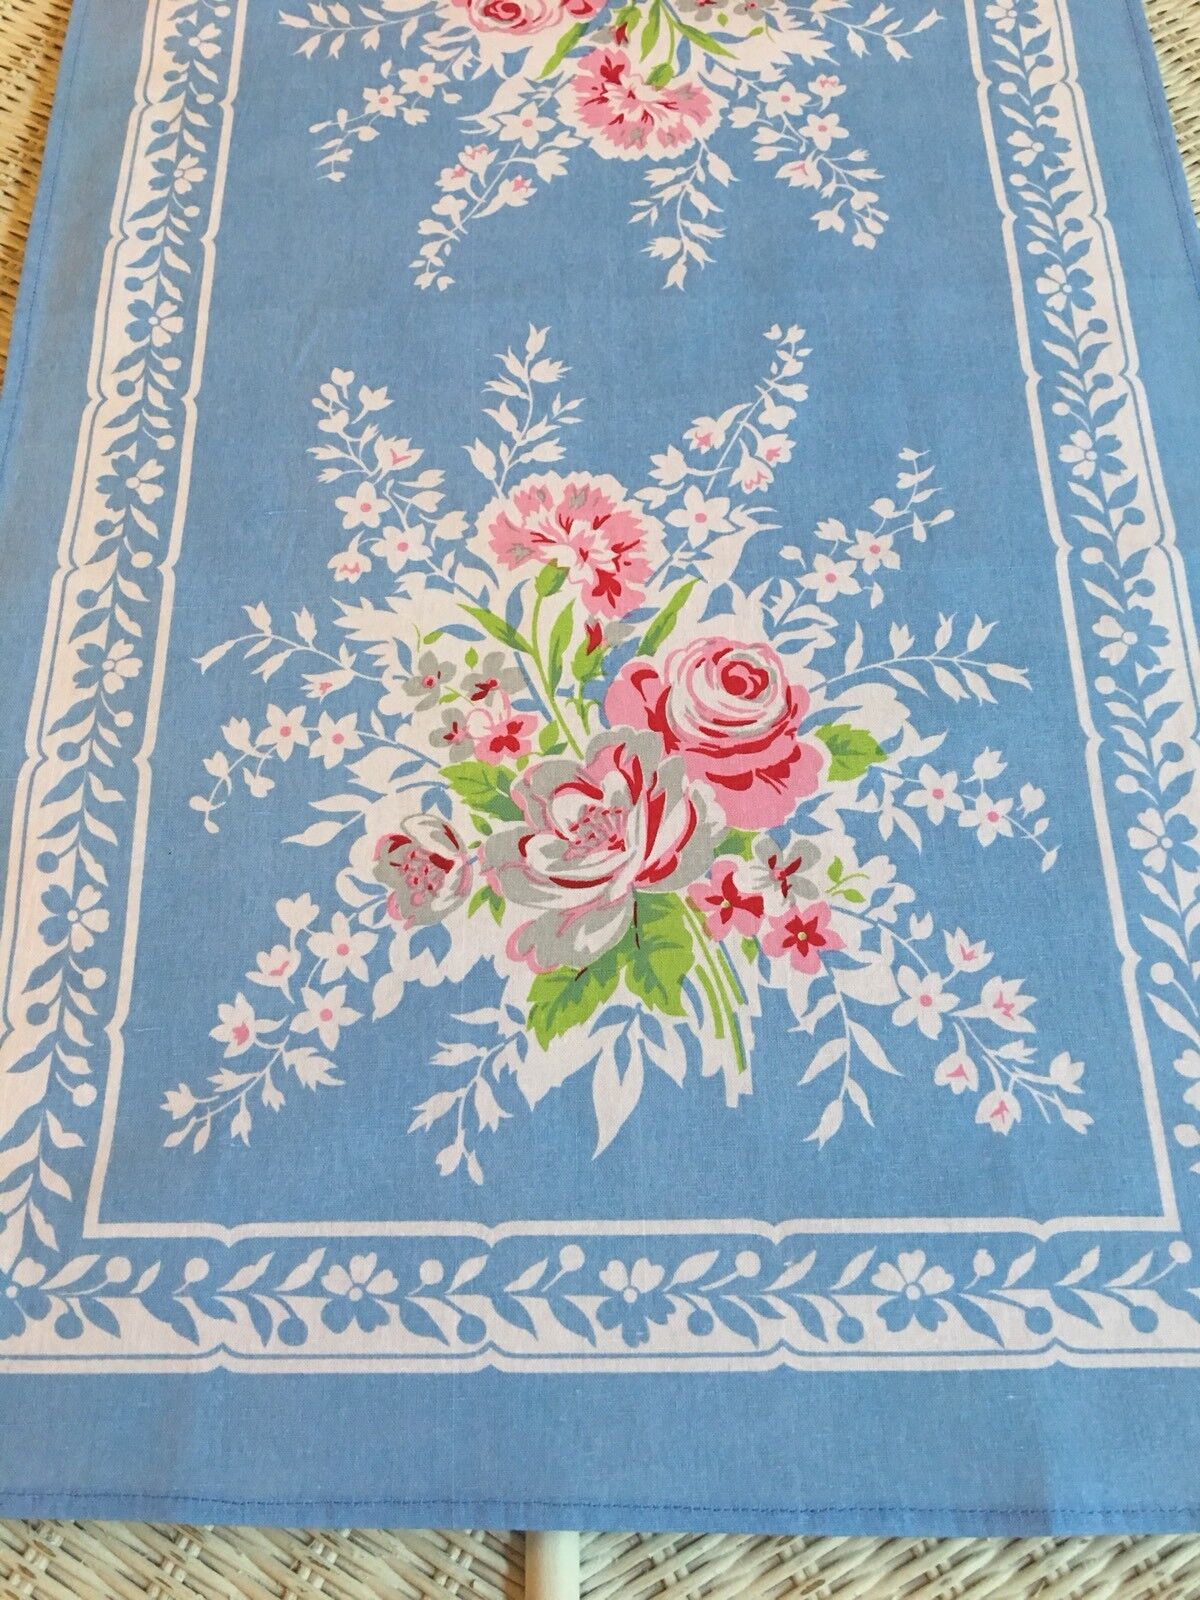 New LuRay Vintage Style Pretty Kitchen Tea Towel - Beautiful Blue Floral Print